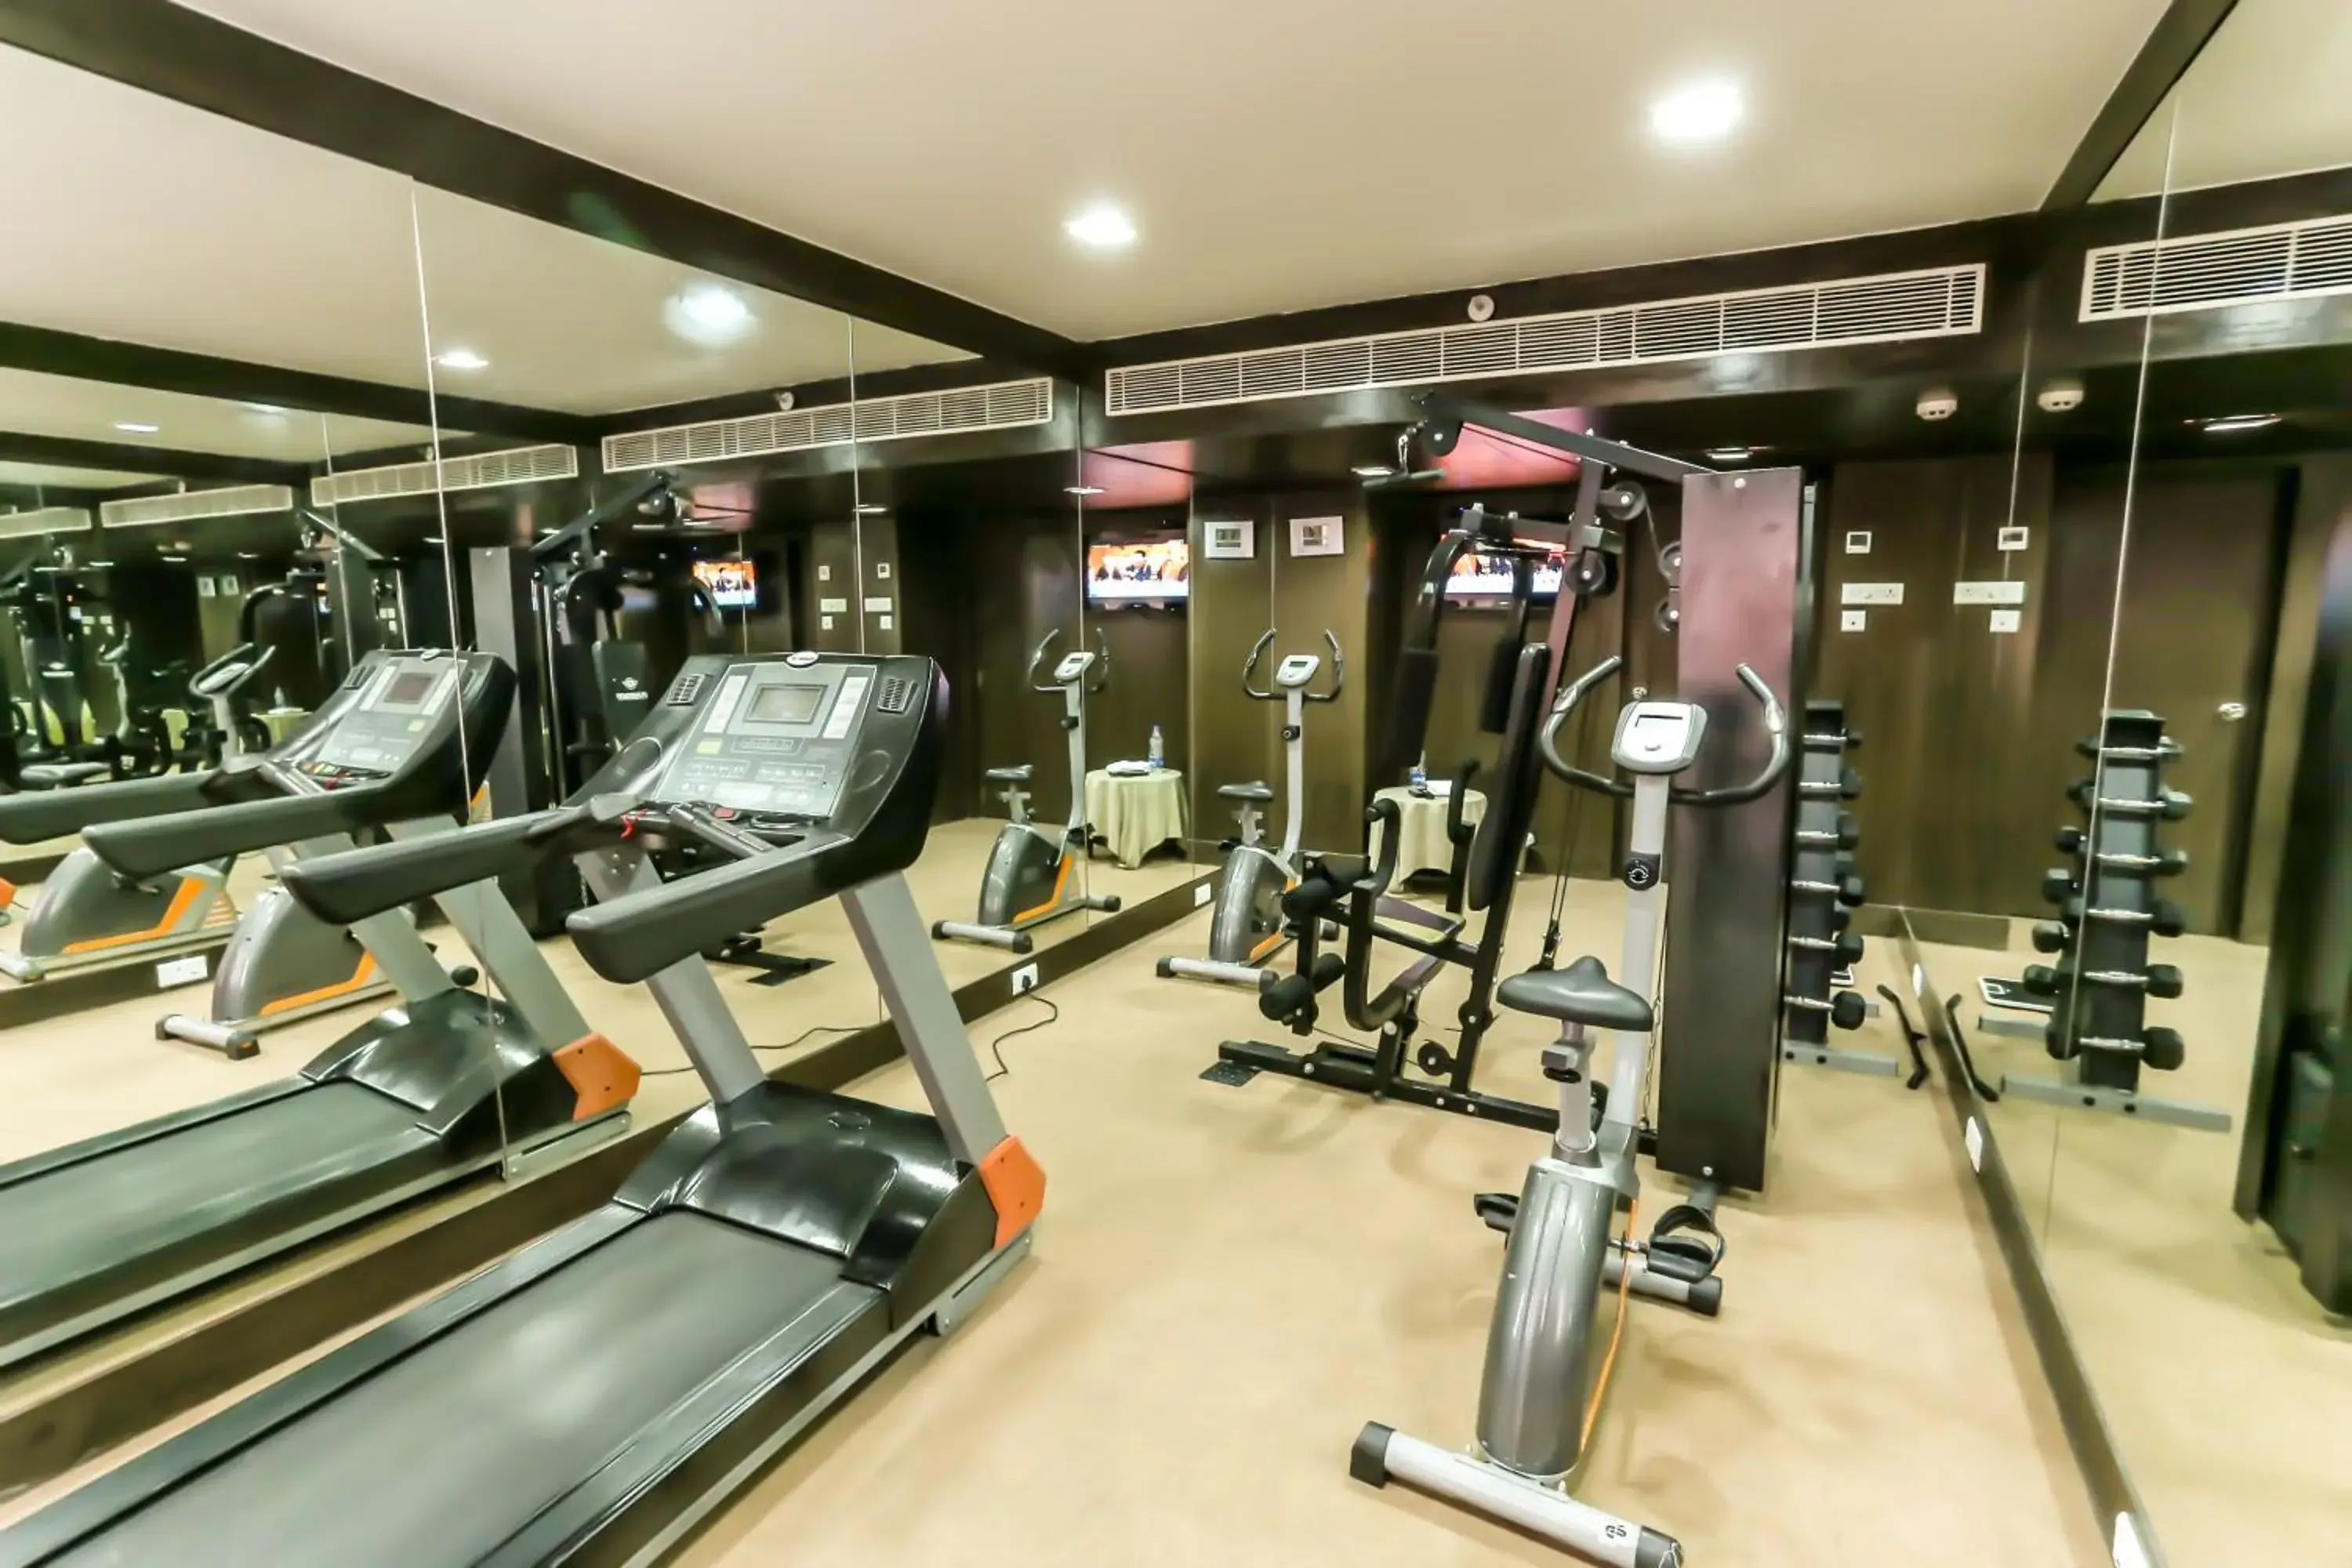 Fitness centre/facilities, Fitness Center/Facilities in Best Western Ramachandra